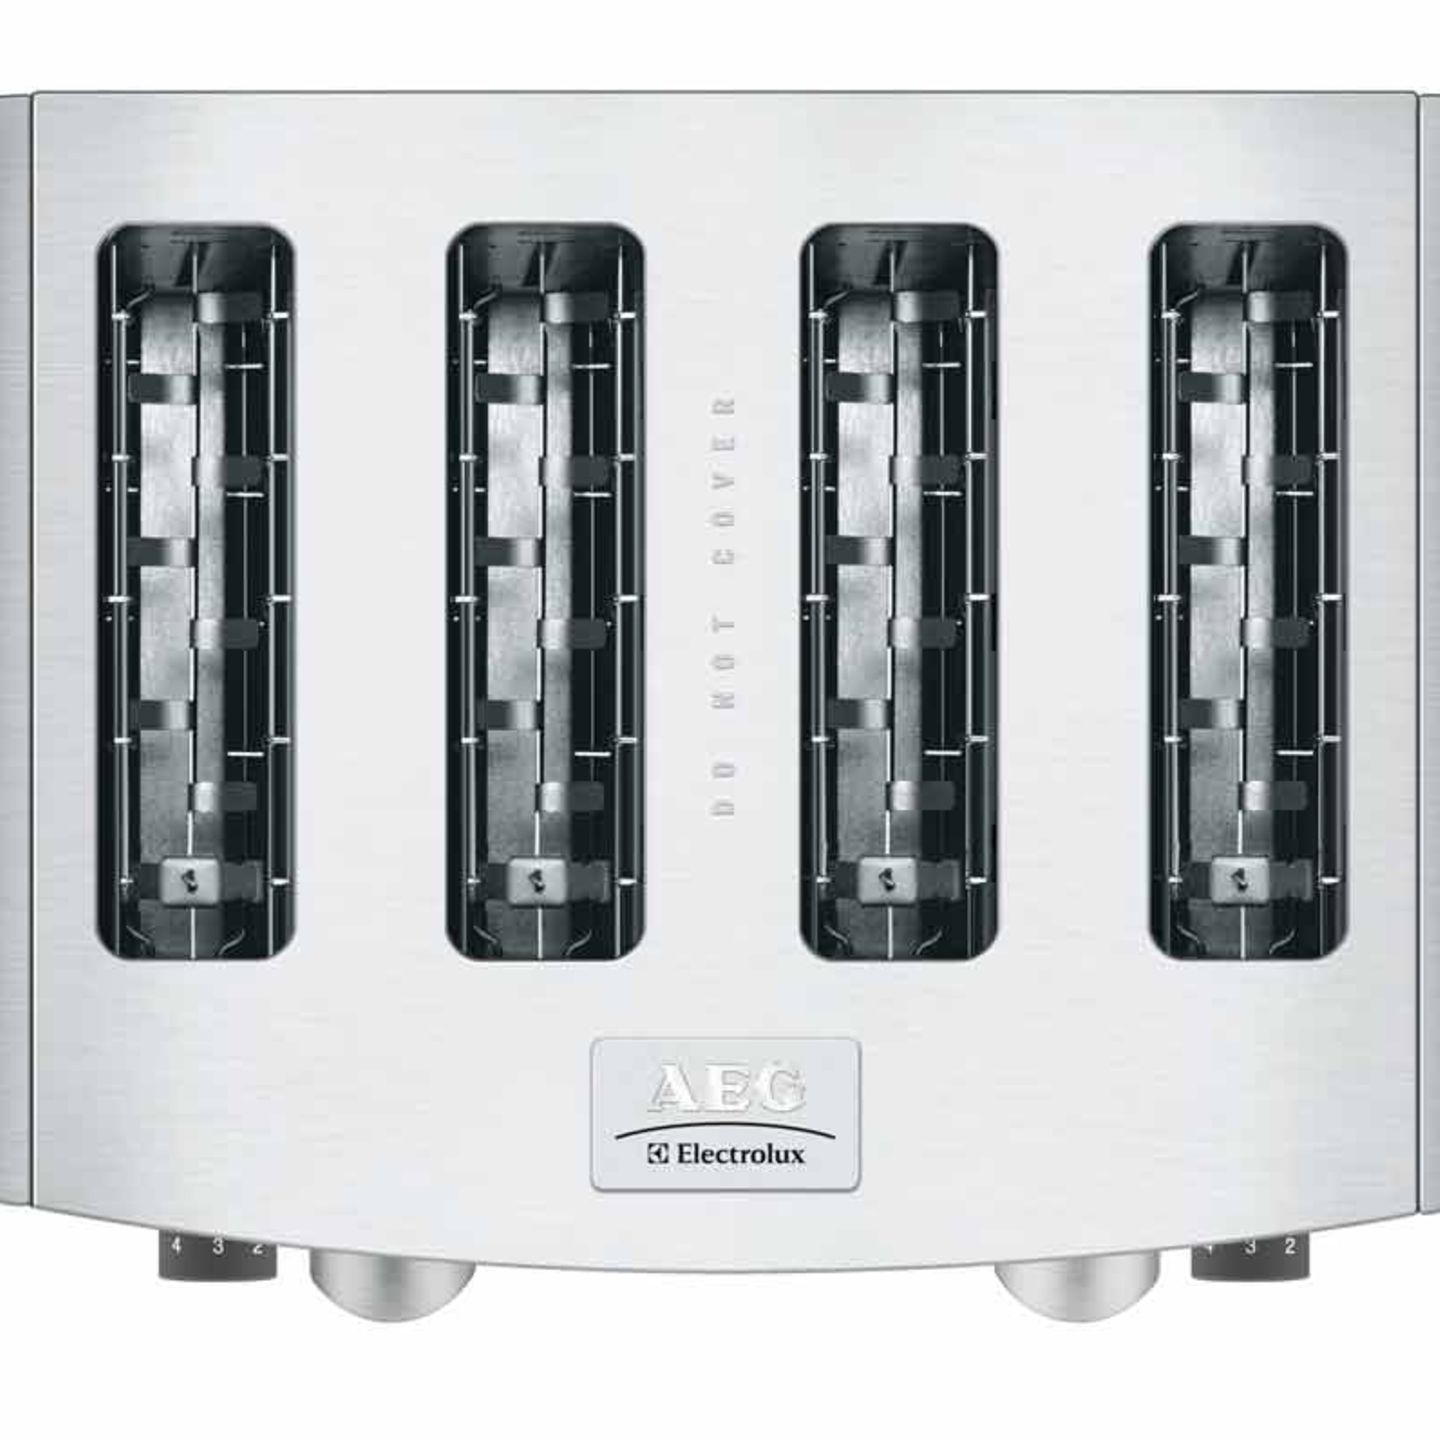 AEG elektrolux 8100 Toaster